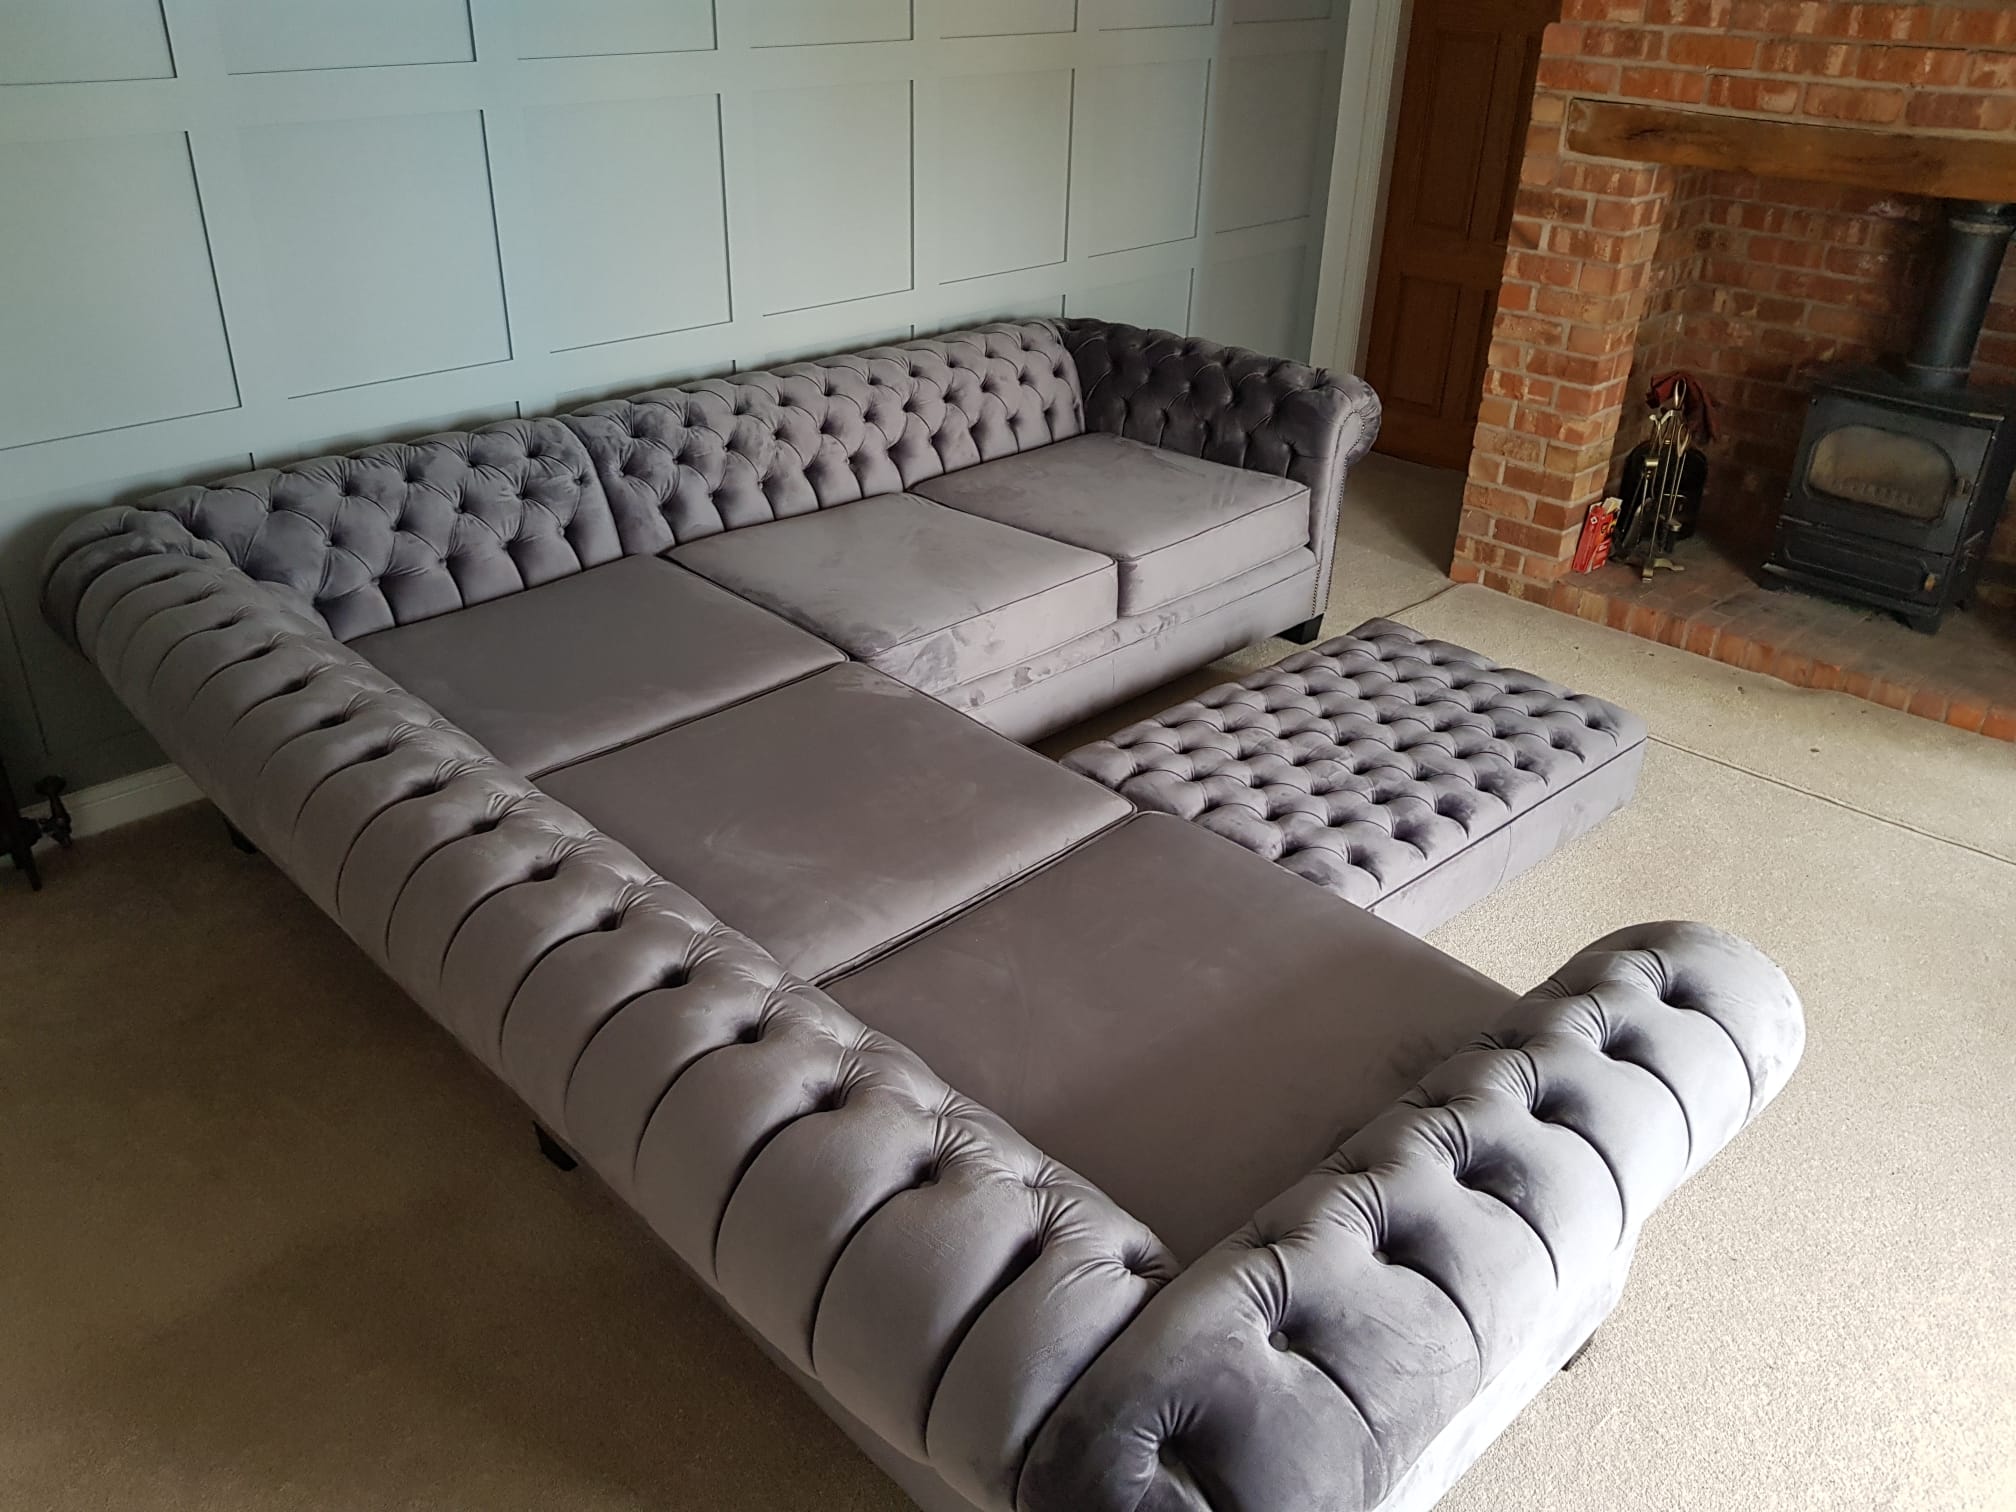 Chesterfield corner sofa